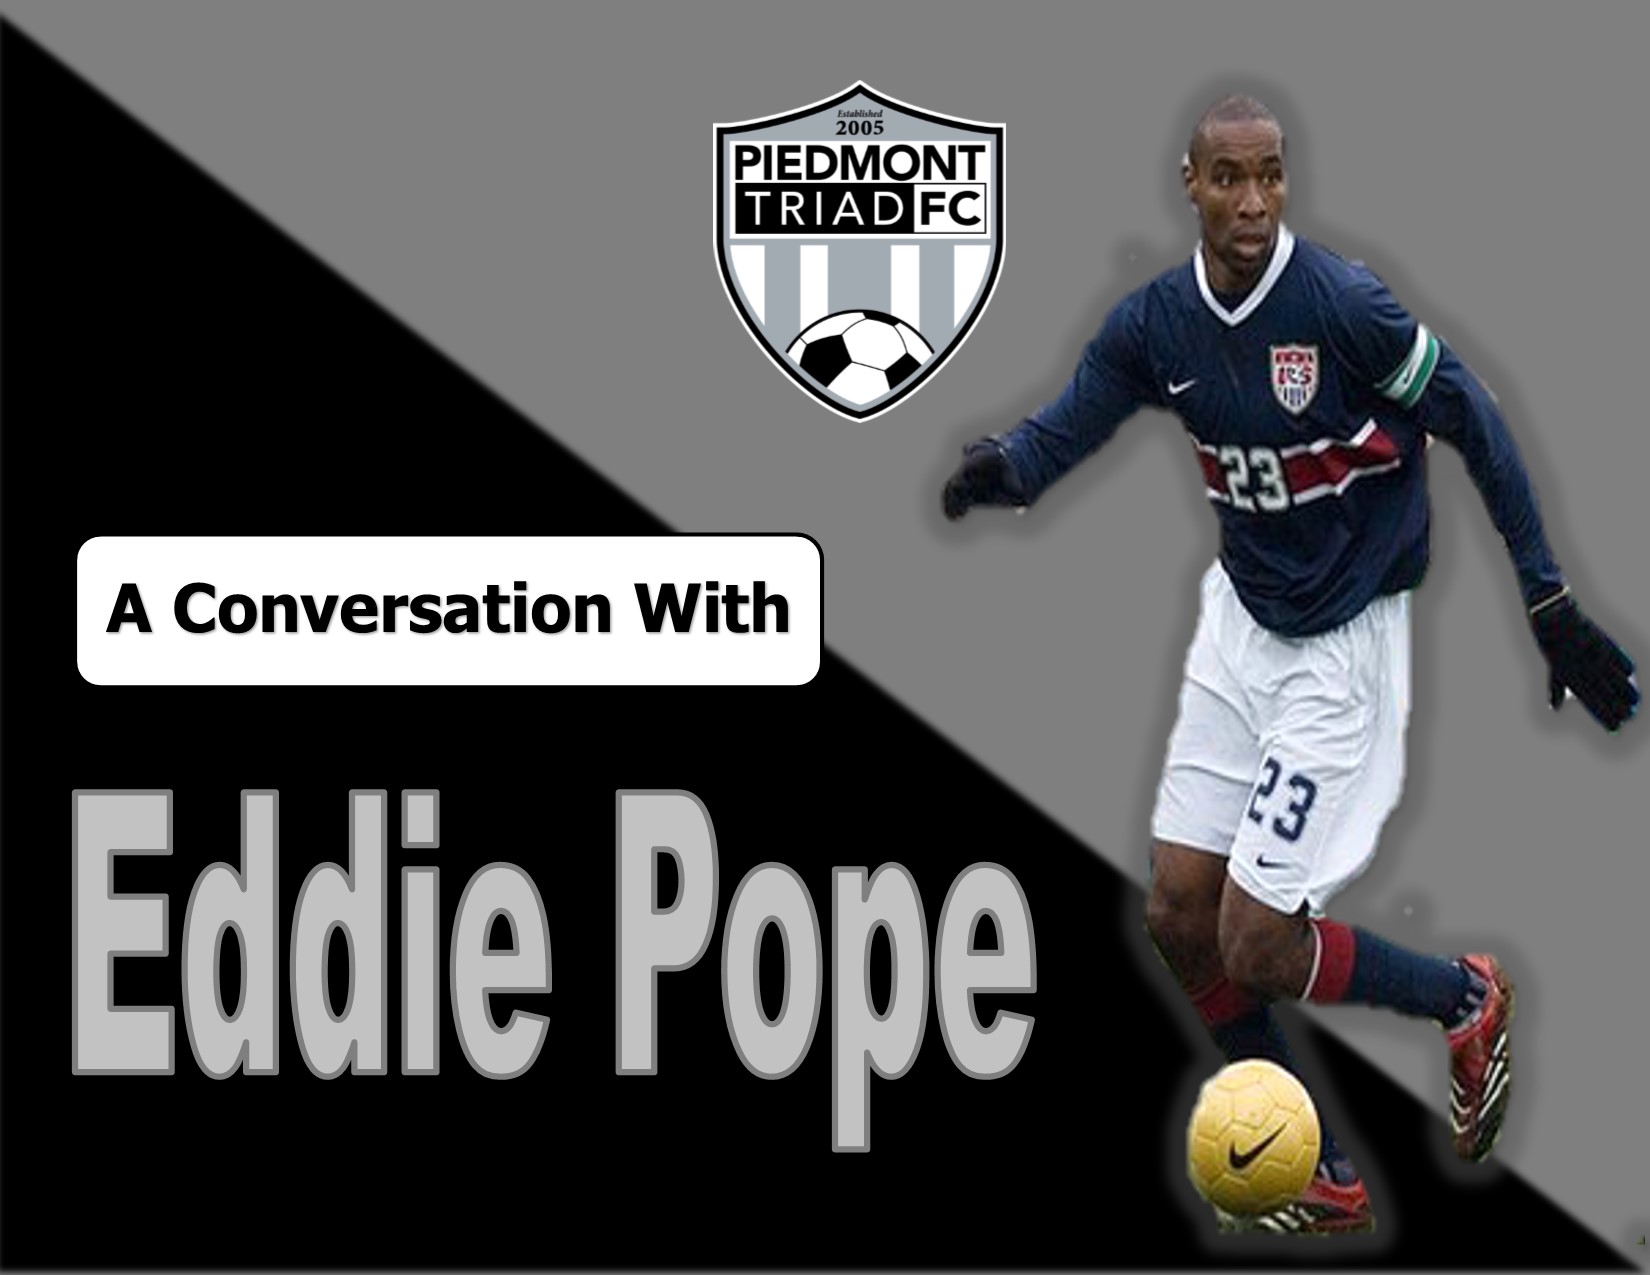 A Conversation With Eddie Pope